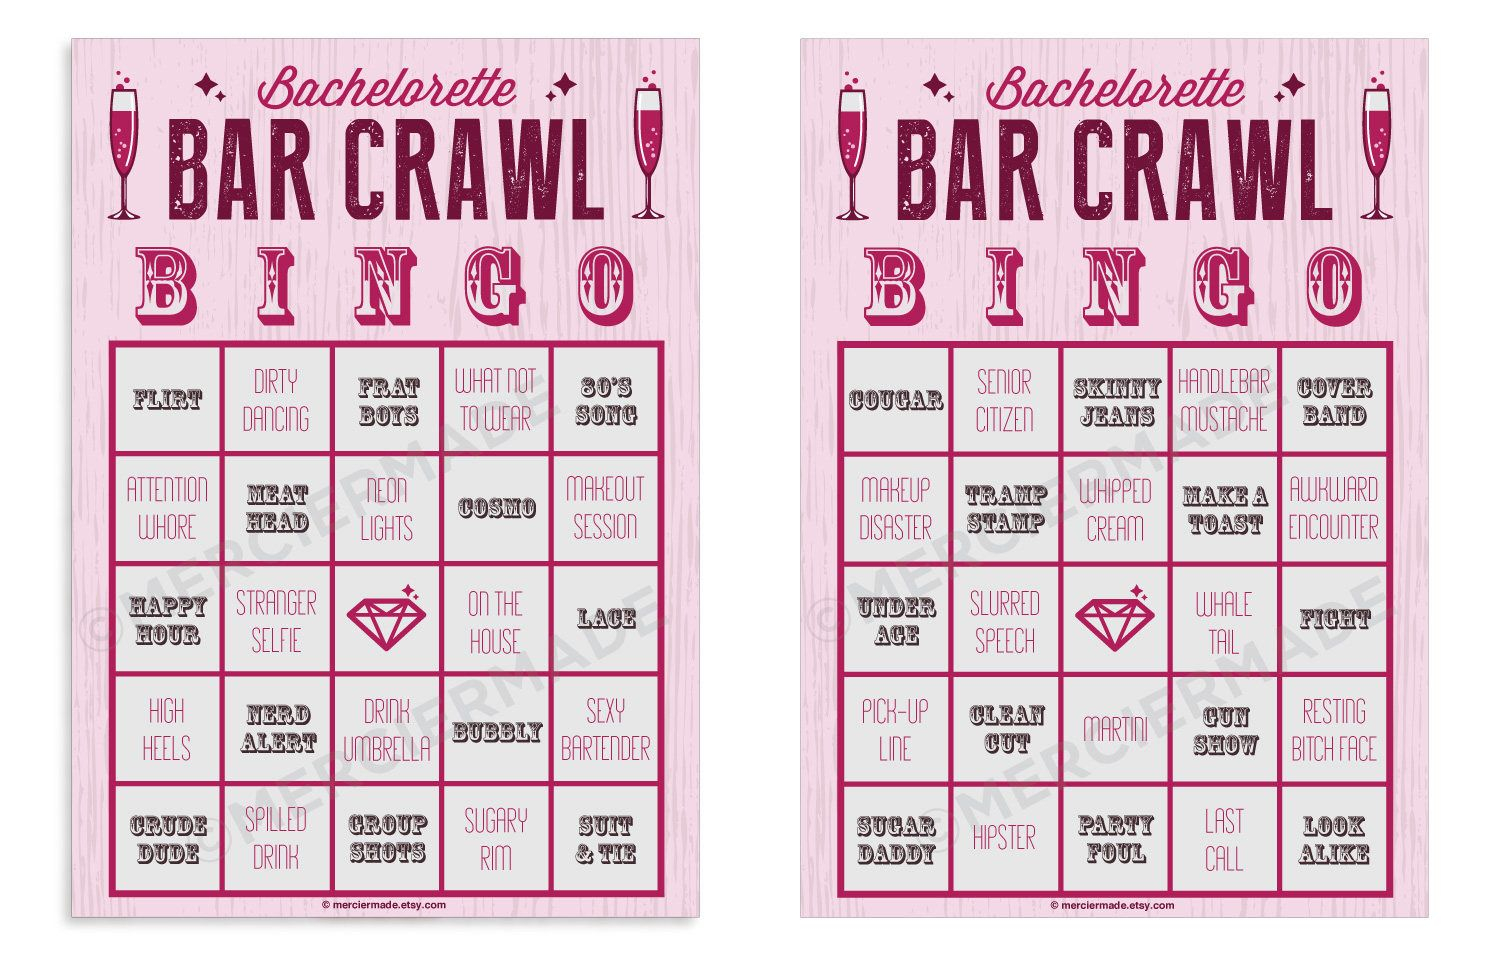 NEW Bachelorette Bar Crawl Bingo 2021 Edition 10 Card 